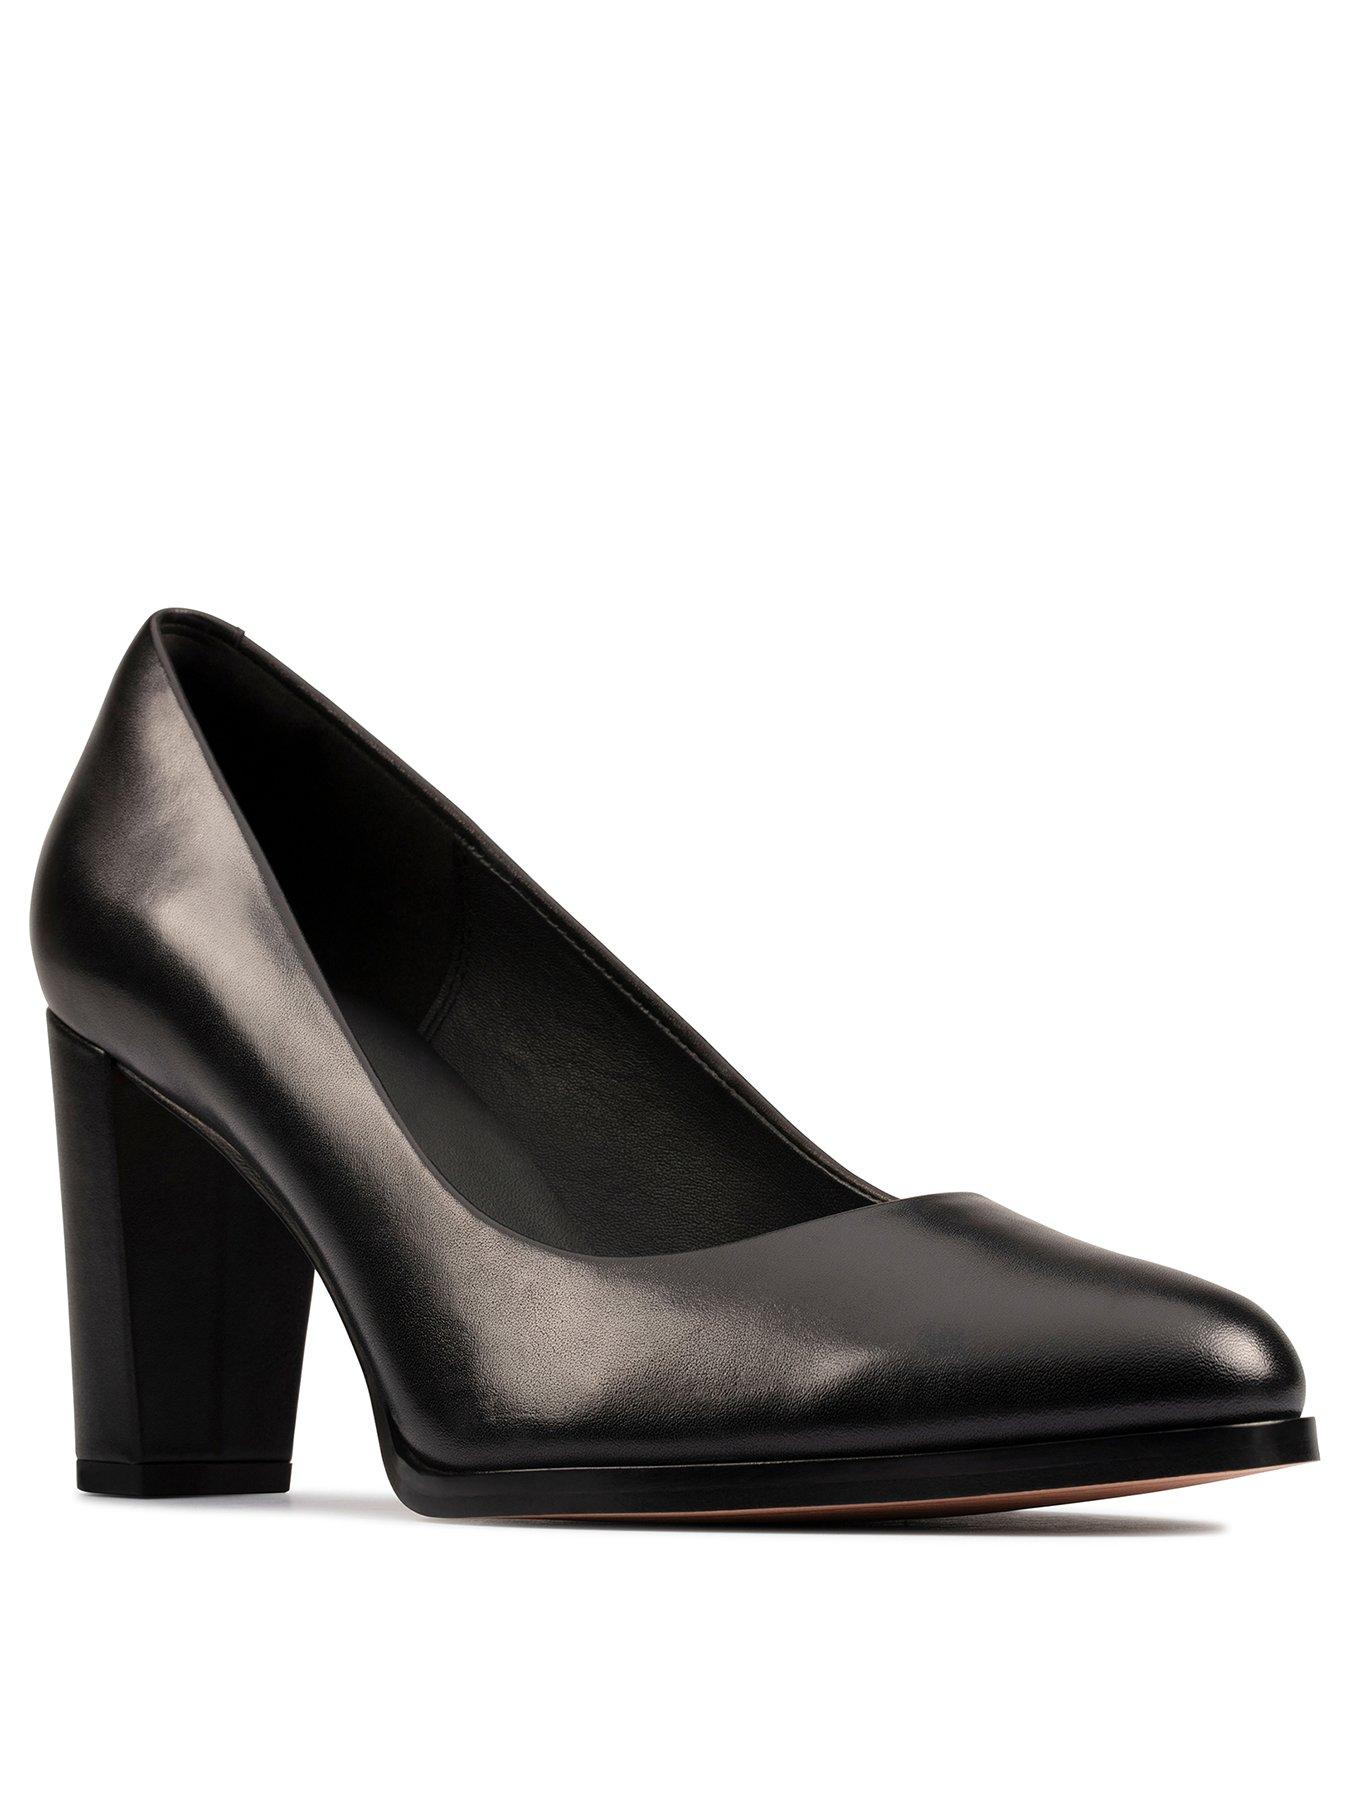 clarks ladies black leather shoes